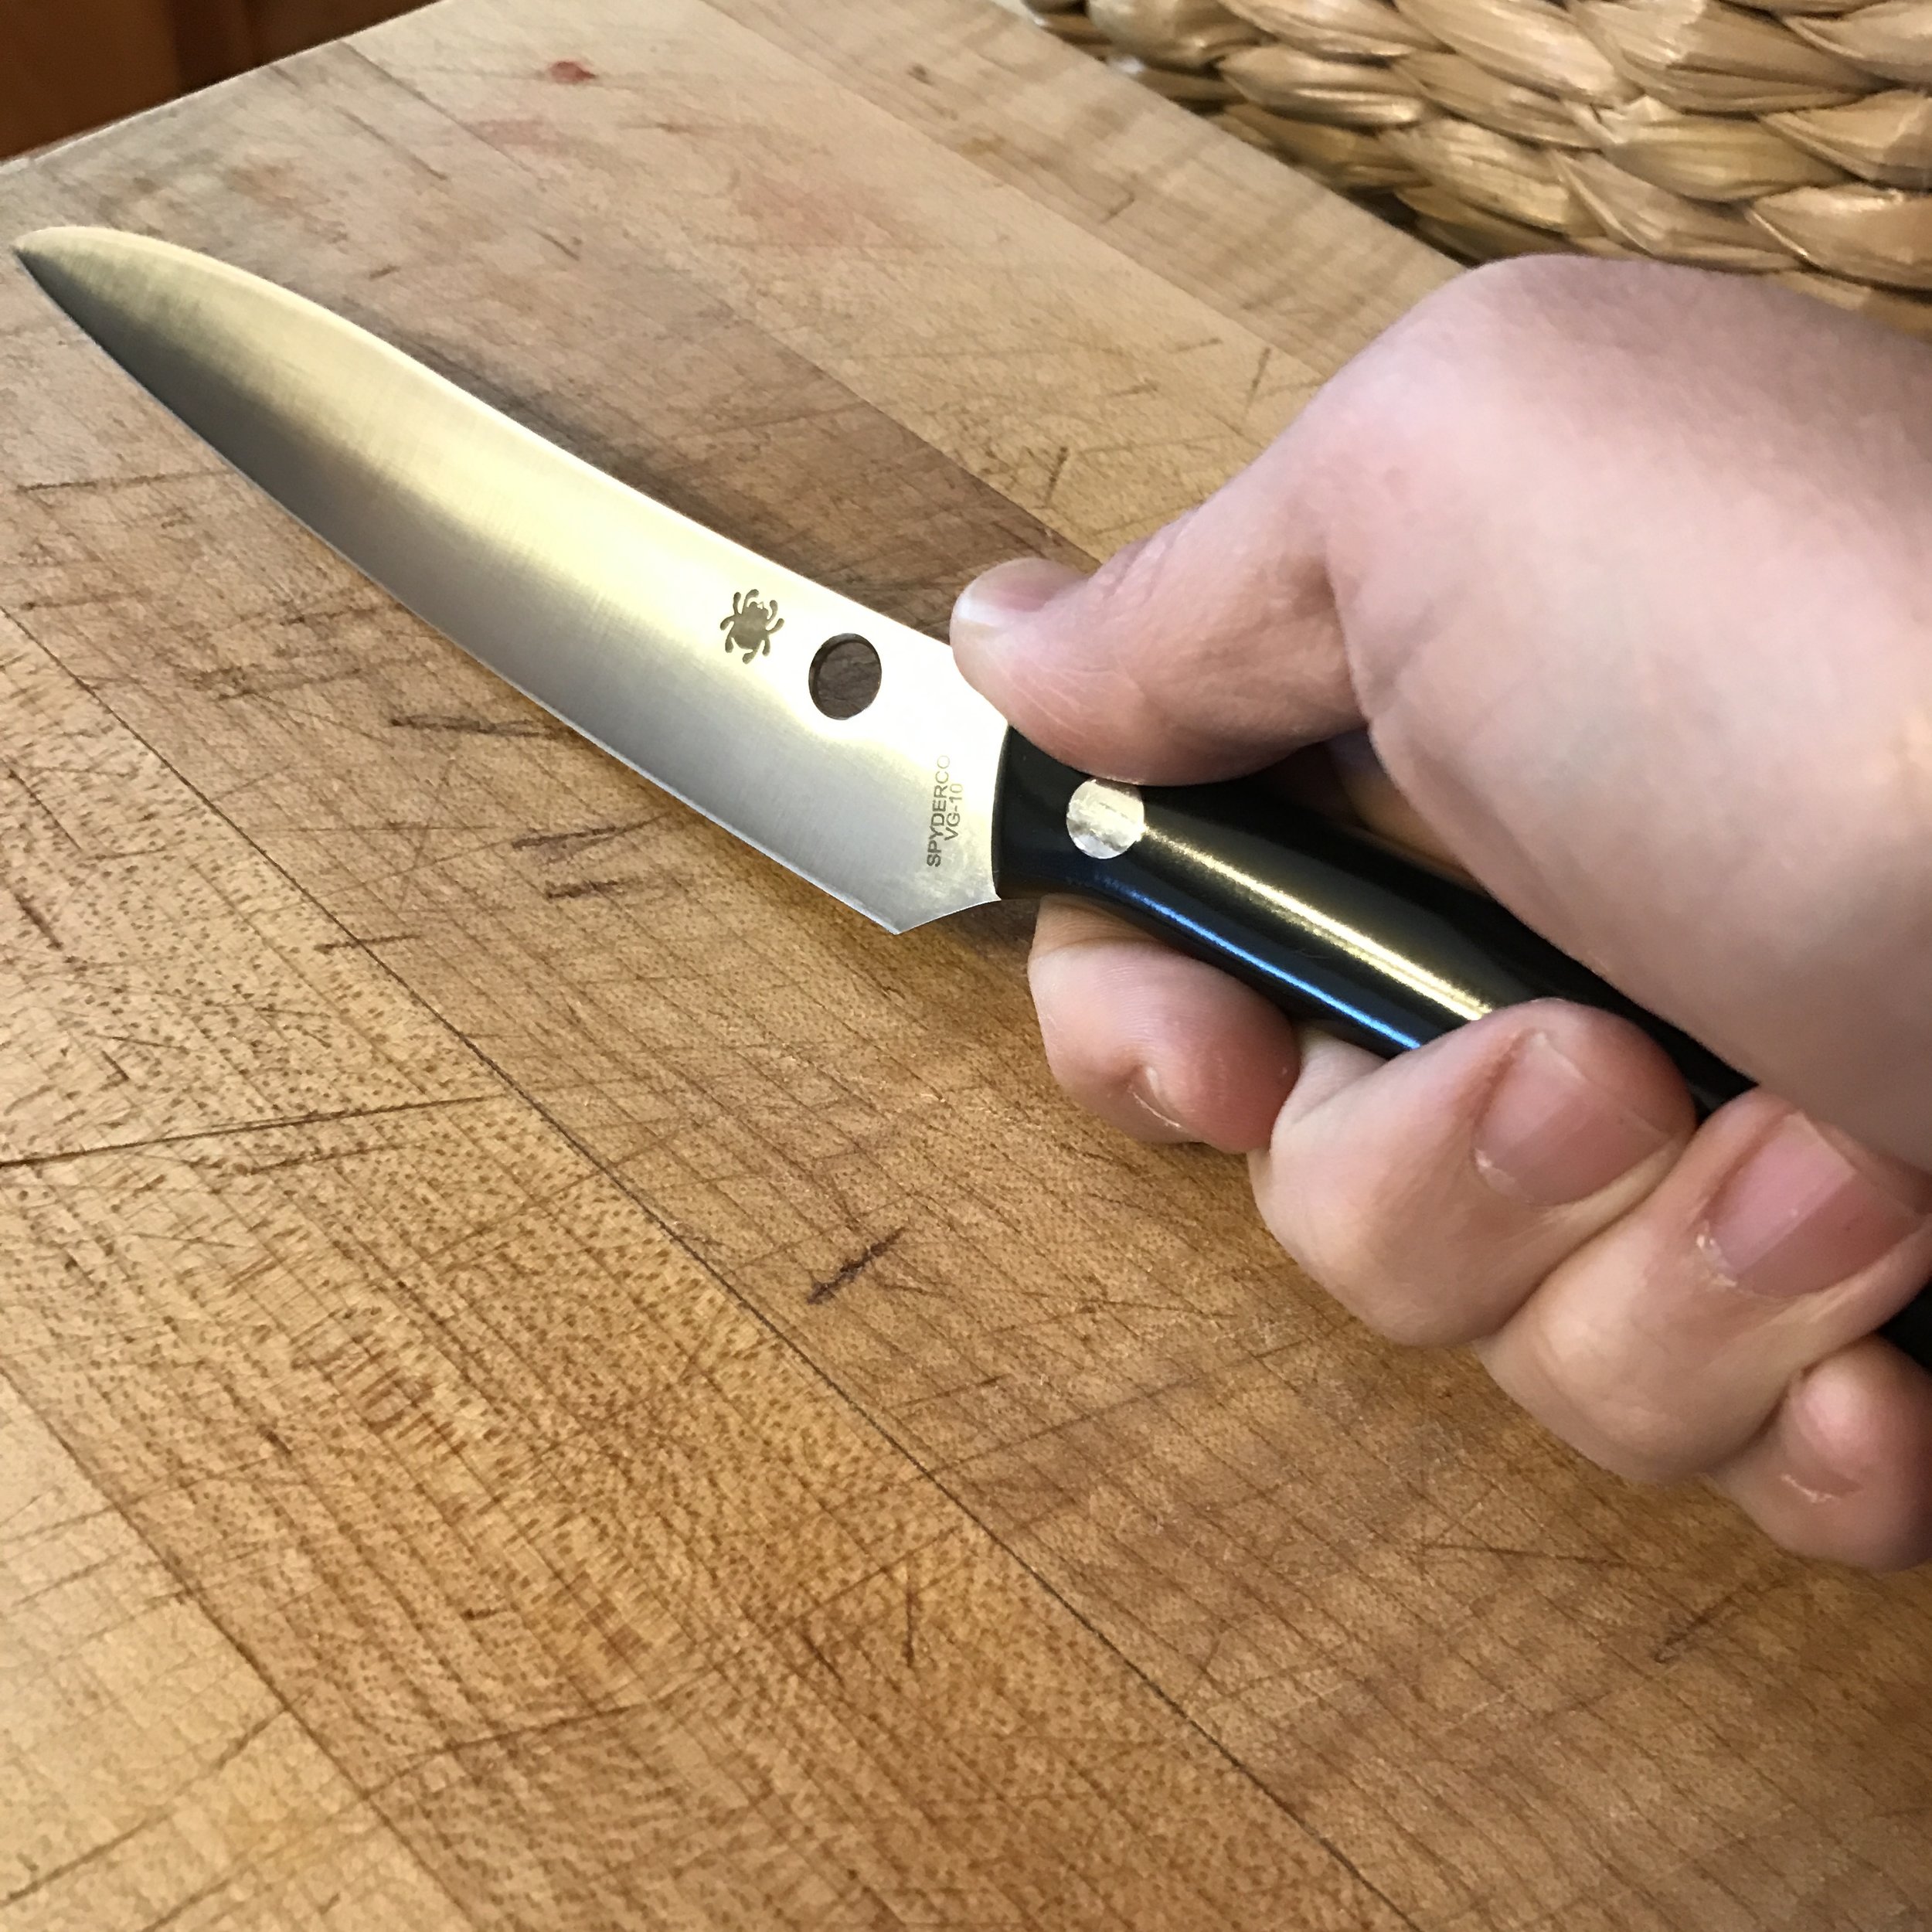 Cook's Knife Corian Black - Spyderco, Inc.